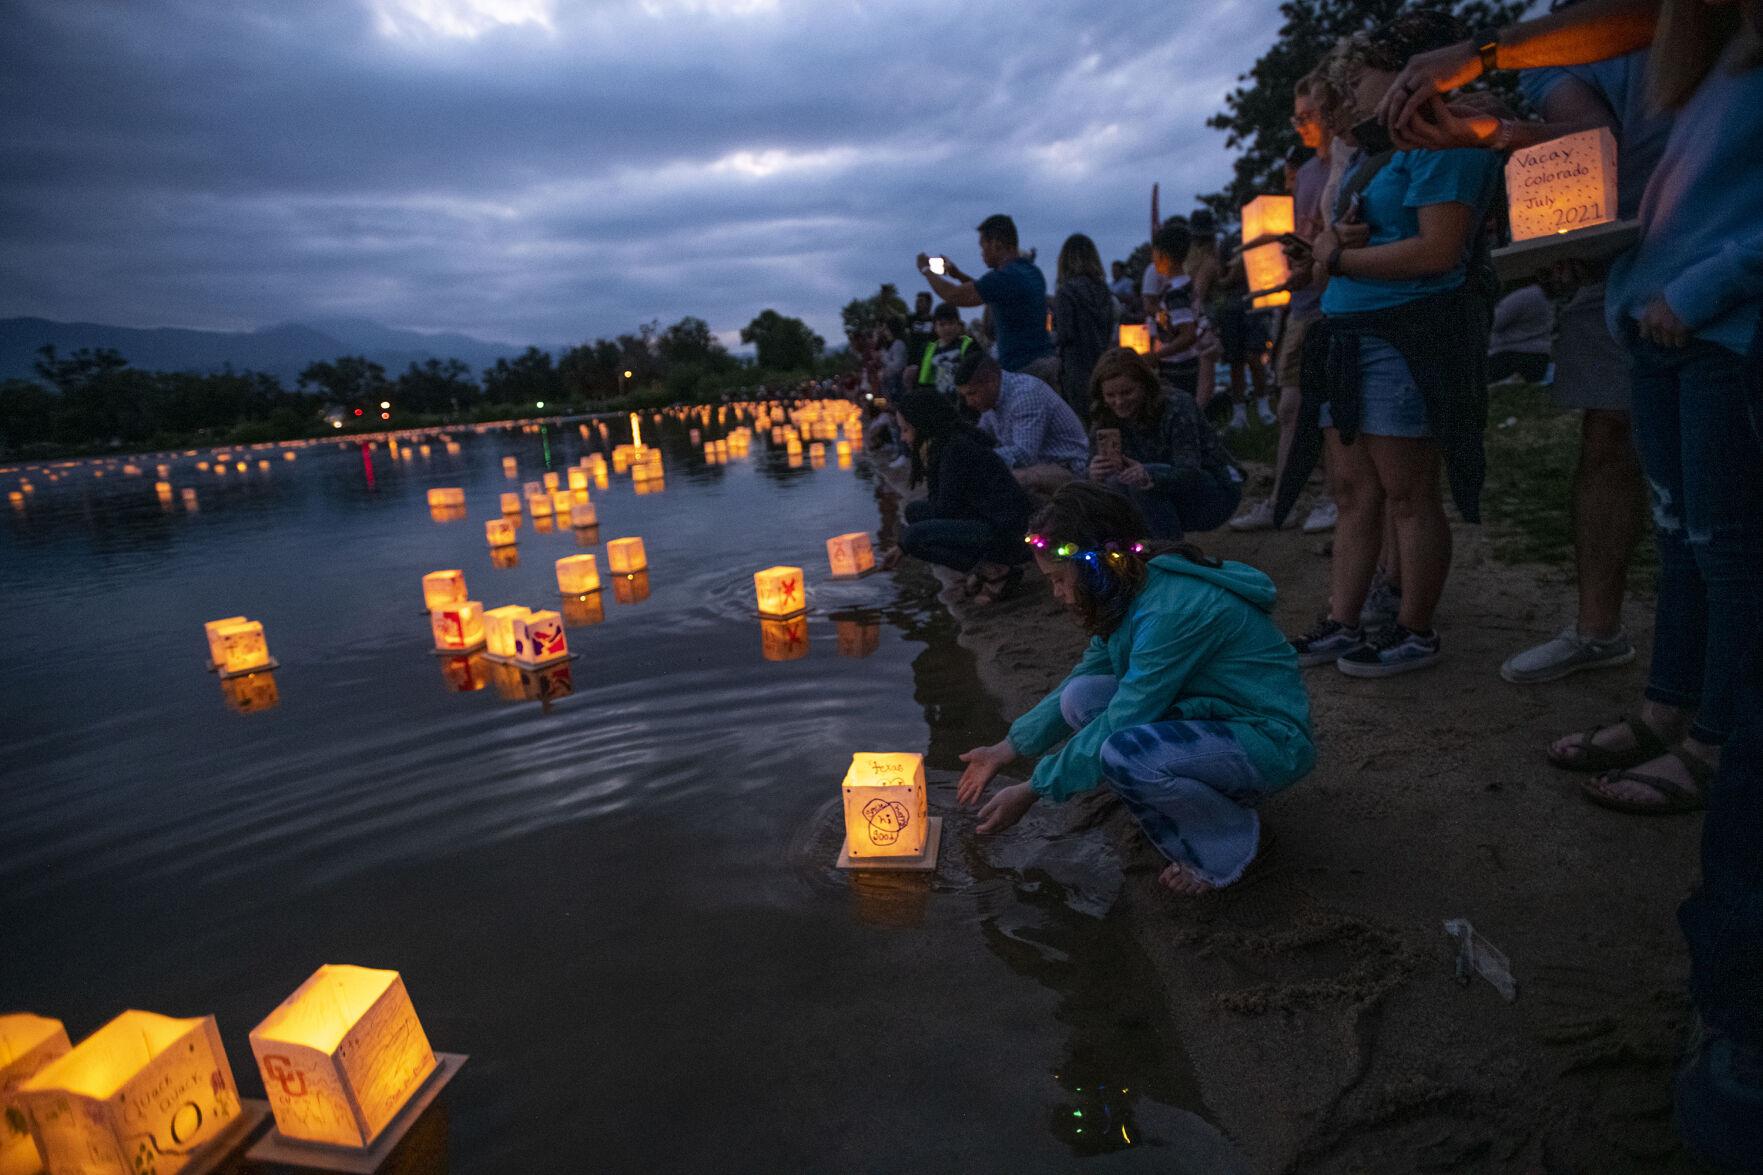 PHOTOS Colorado Springs Water Lantern Festival Multimedia